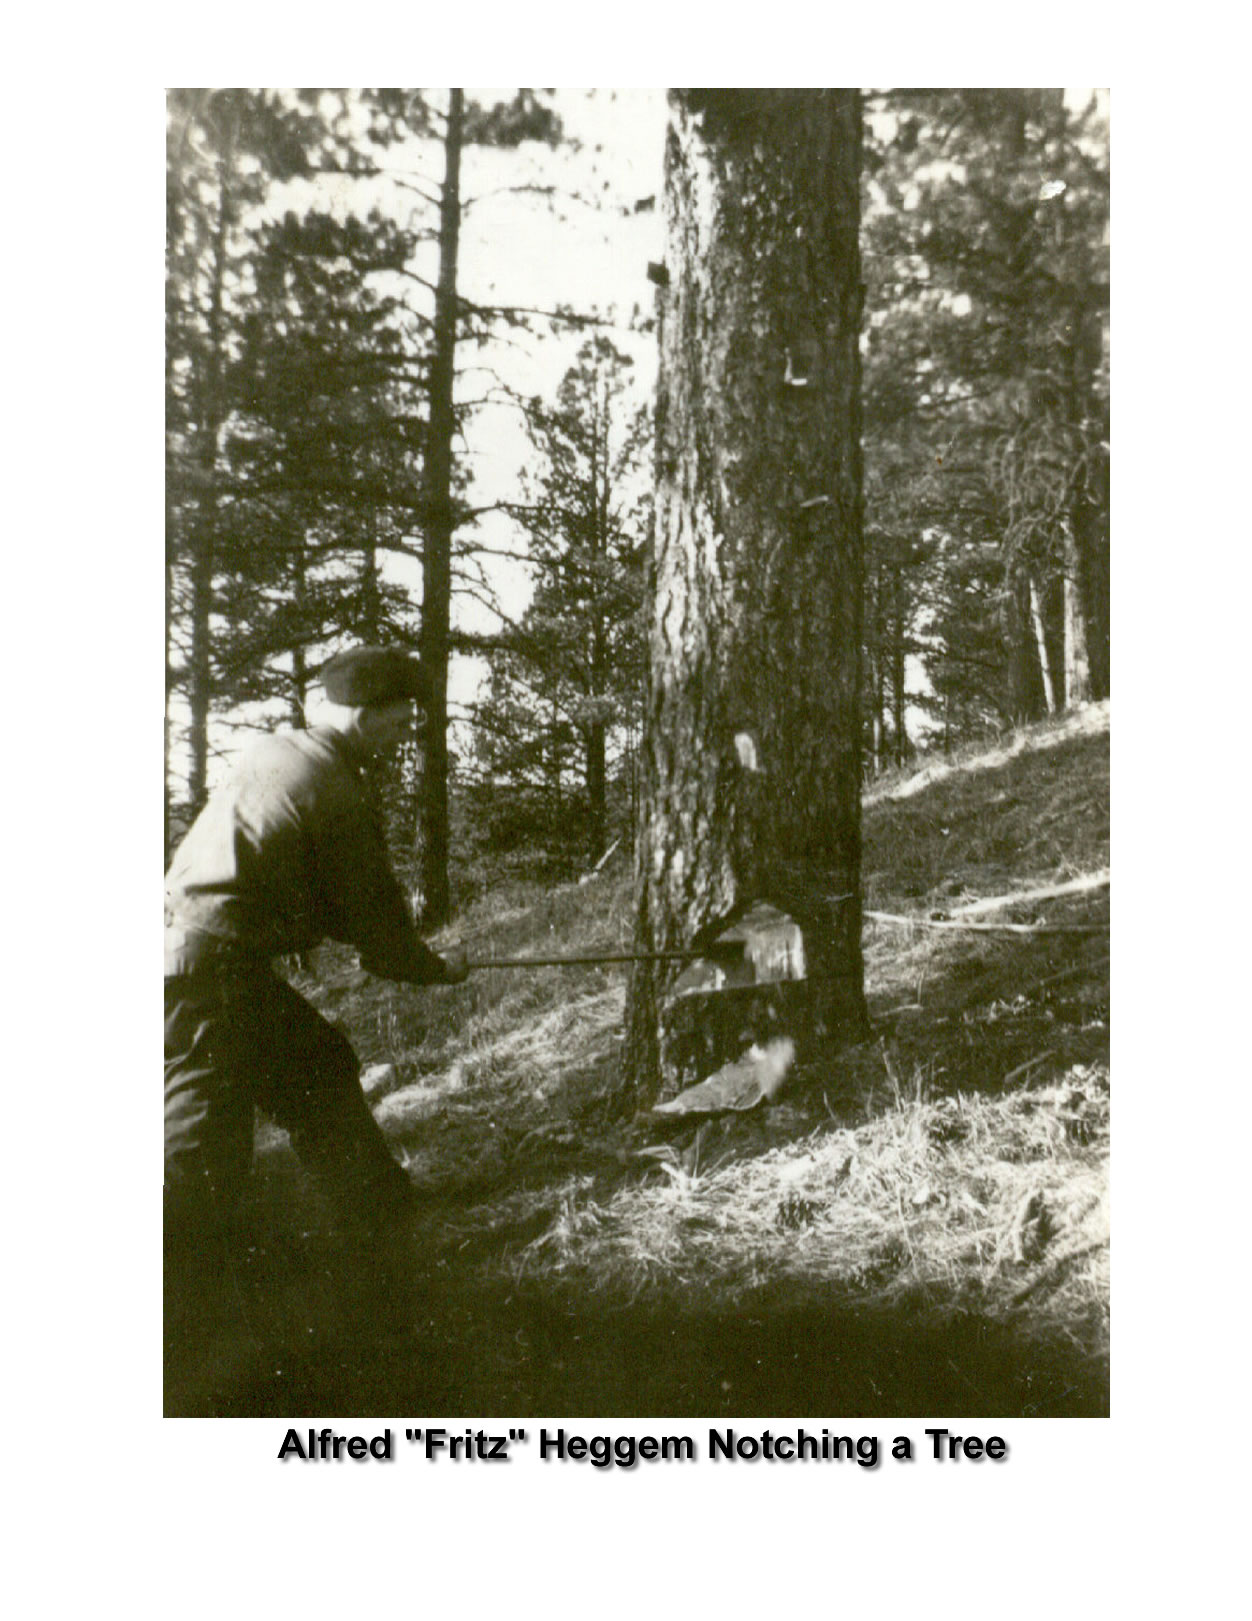 Fritz Heggem notching a tree